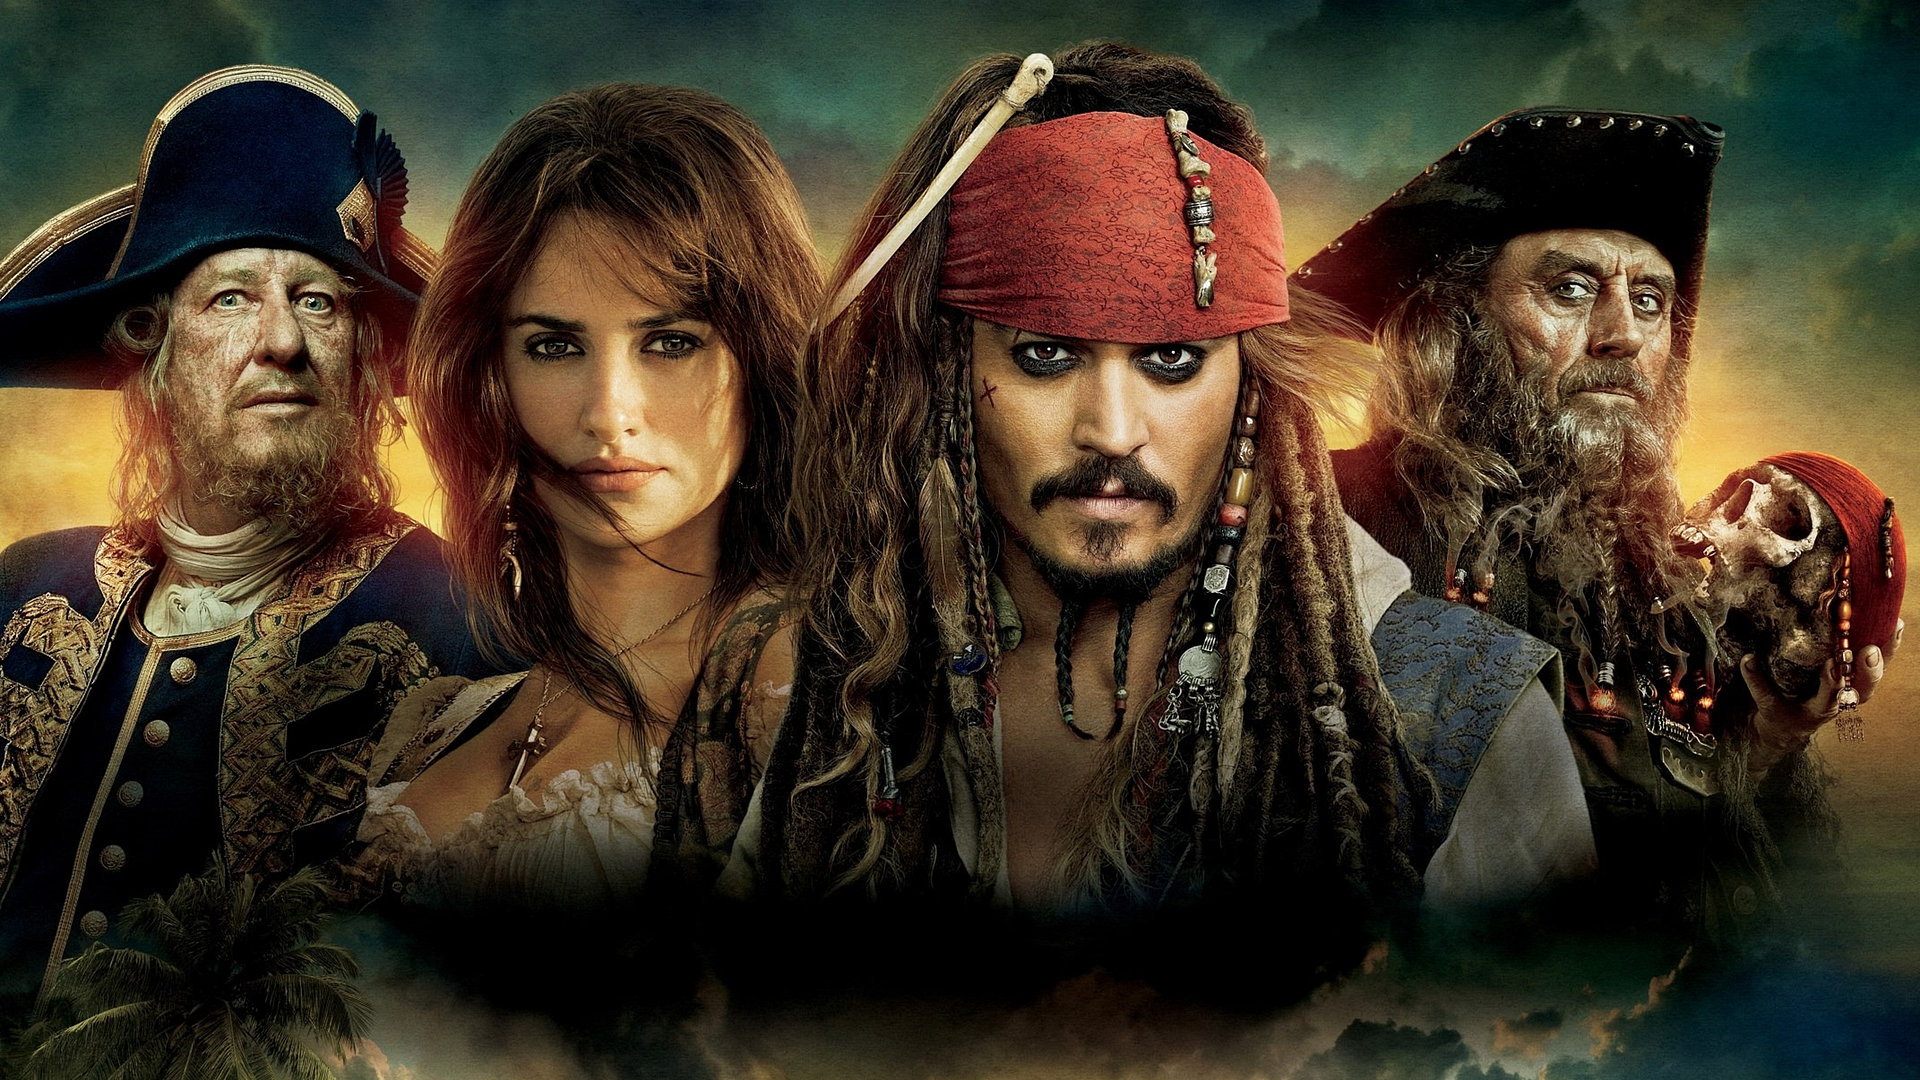 Pirates of the Caribbean: Vierailla vesillä